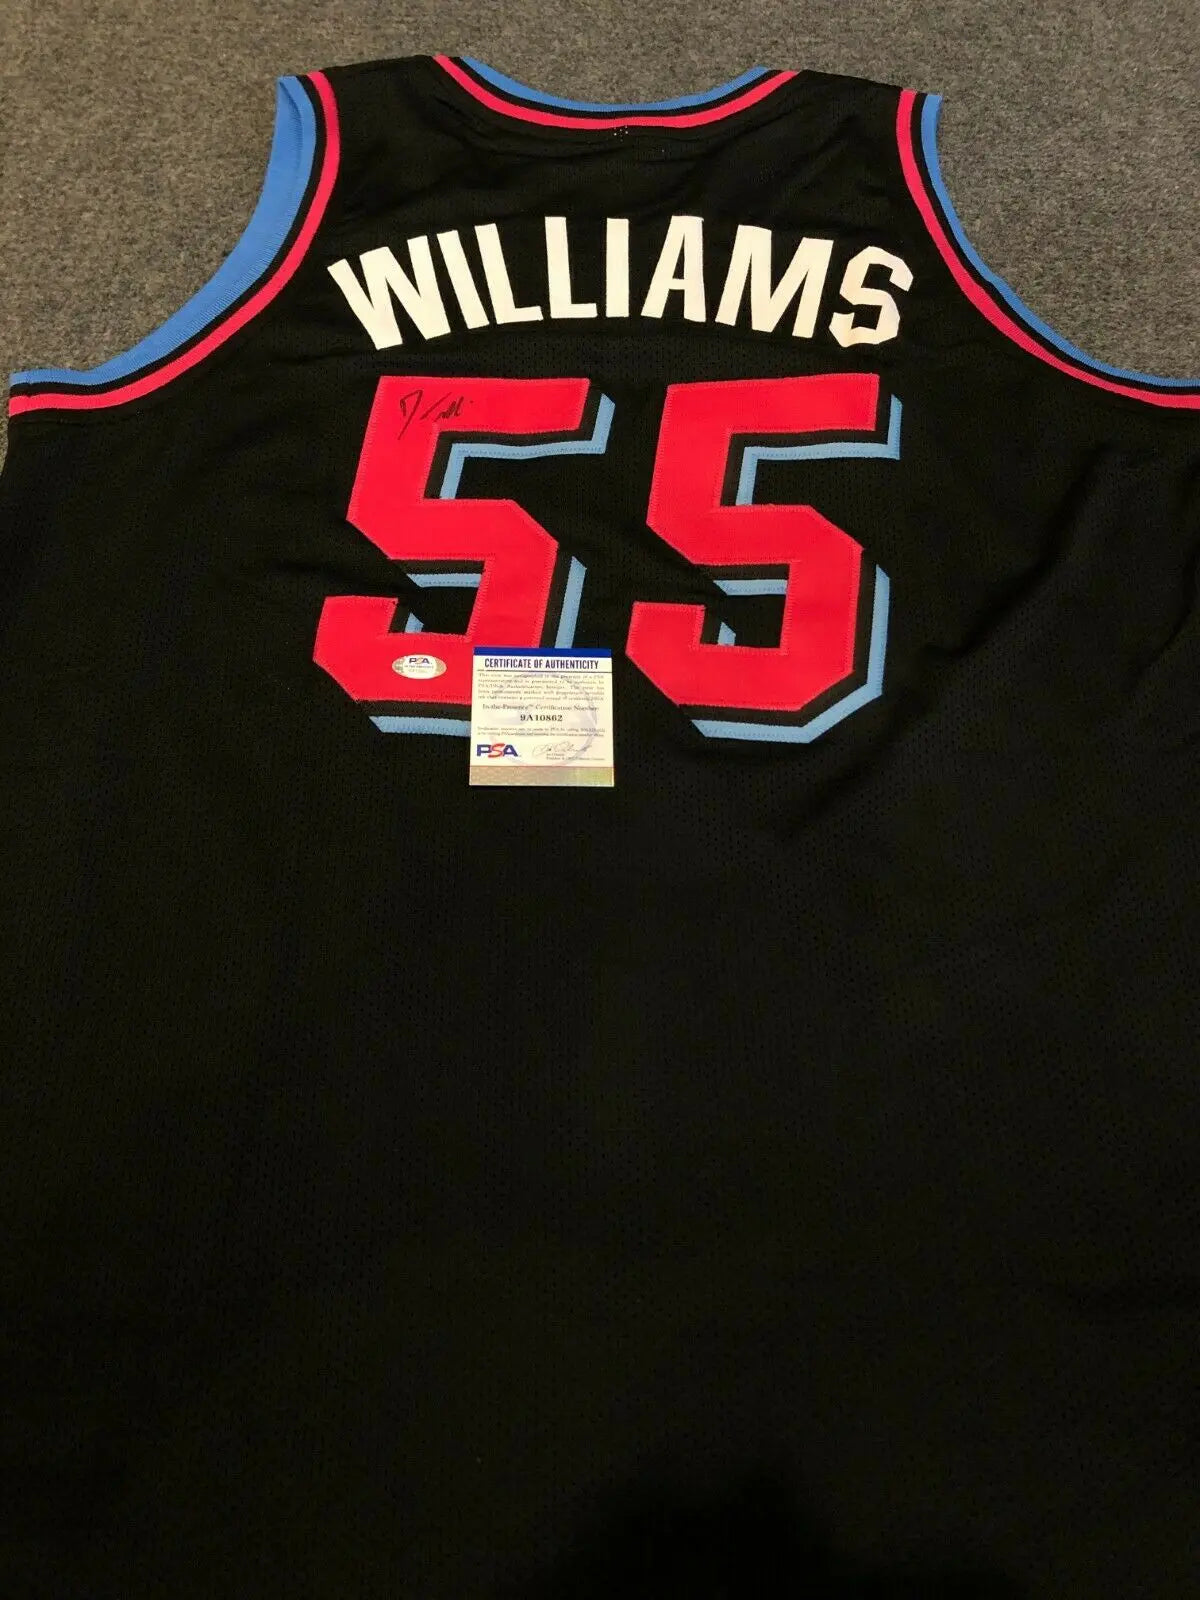 MVP Authentics Miami Heat Jason Williams Autographed Signed Miami Vice Jersey Psa Coa 125.10 sports jersey framing , jersey framing